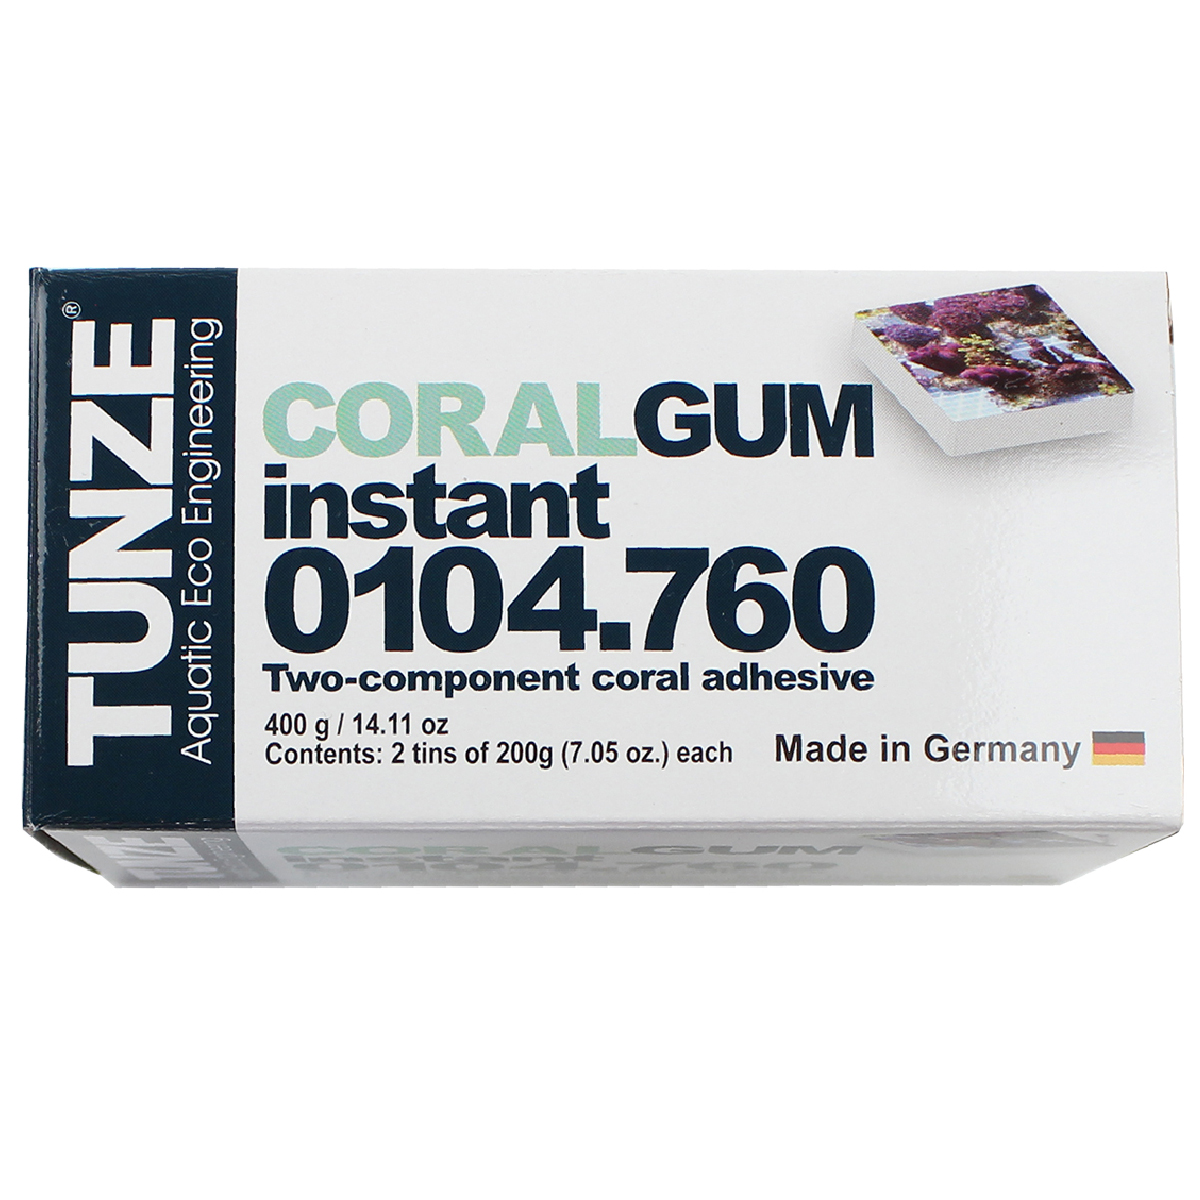 Coral Gum instant, 400g